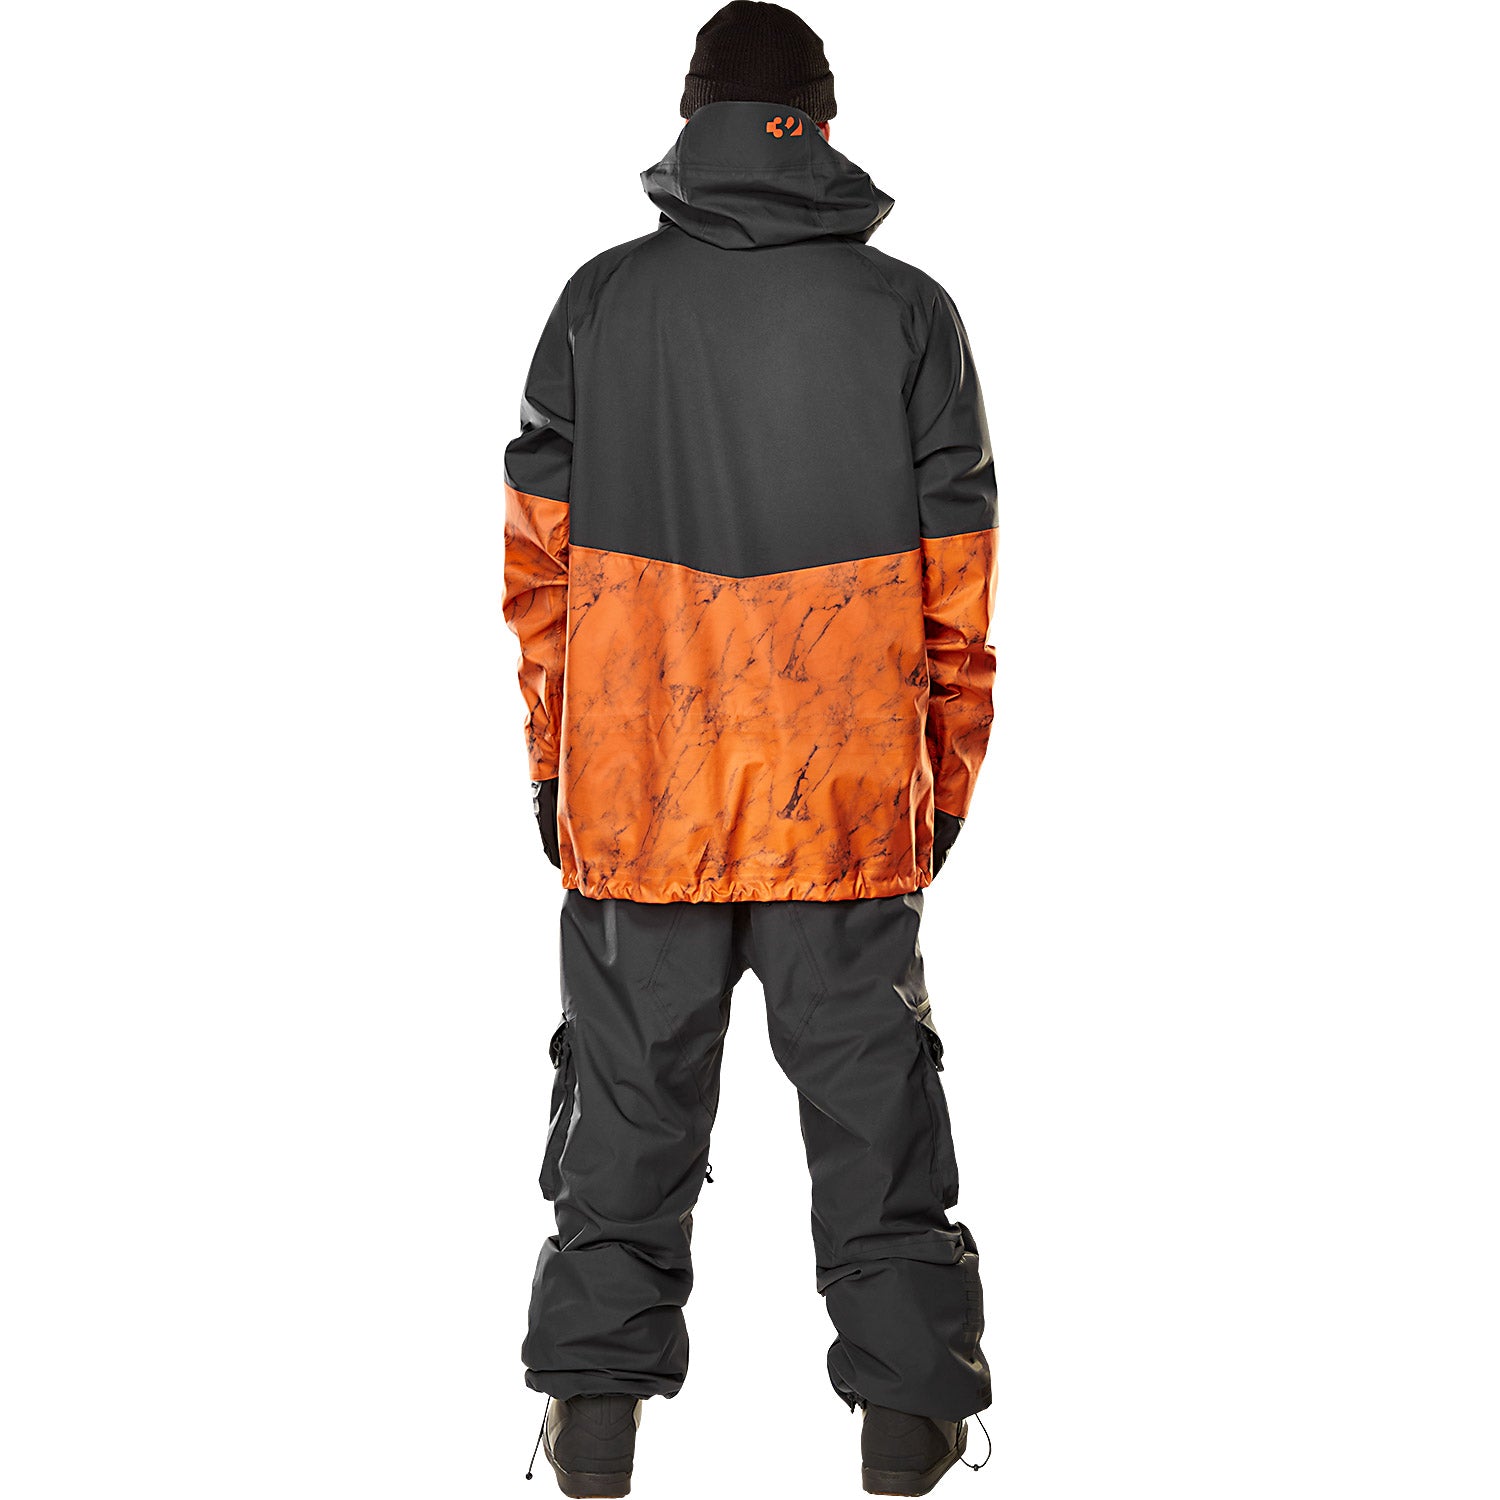 TM-3 Snowboard Jacket